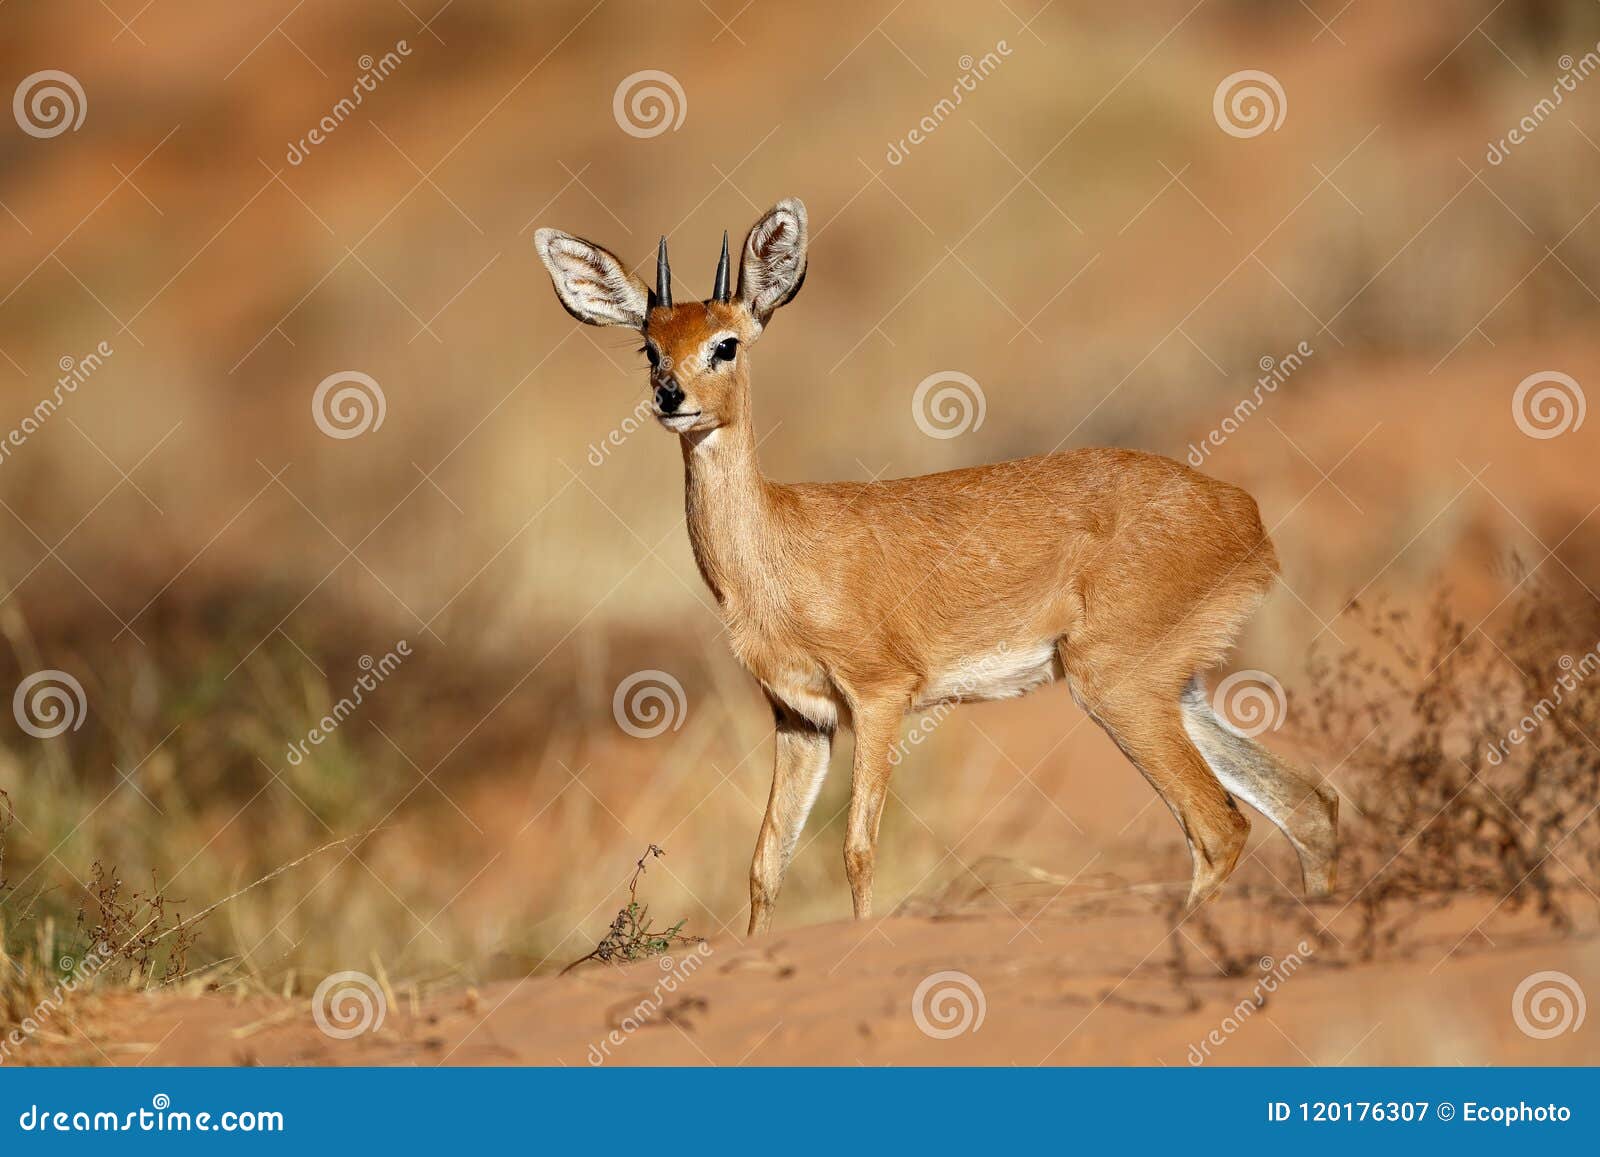 male steenbok antelope - kalahari desert